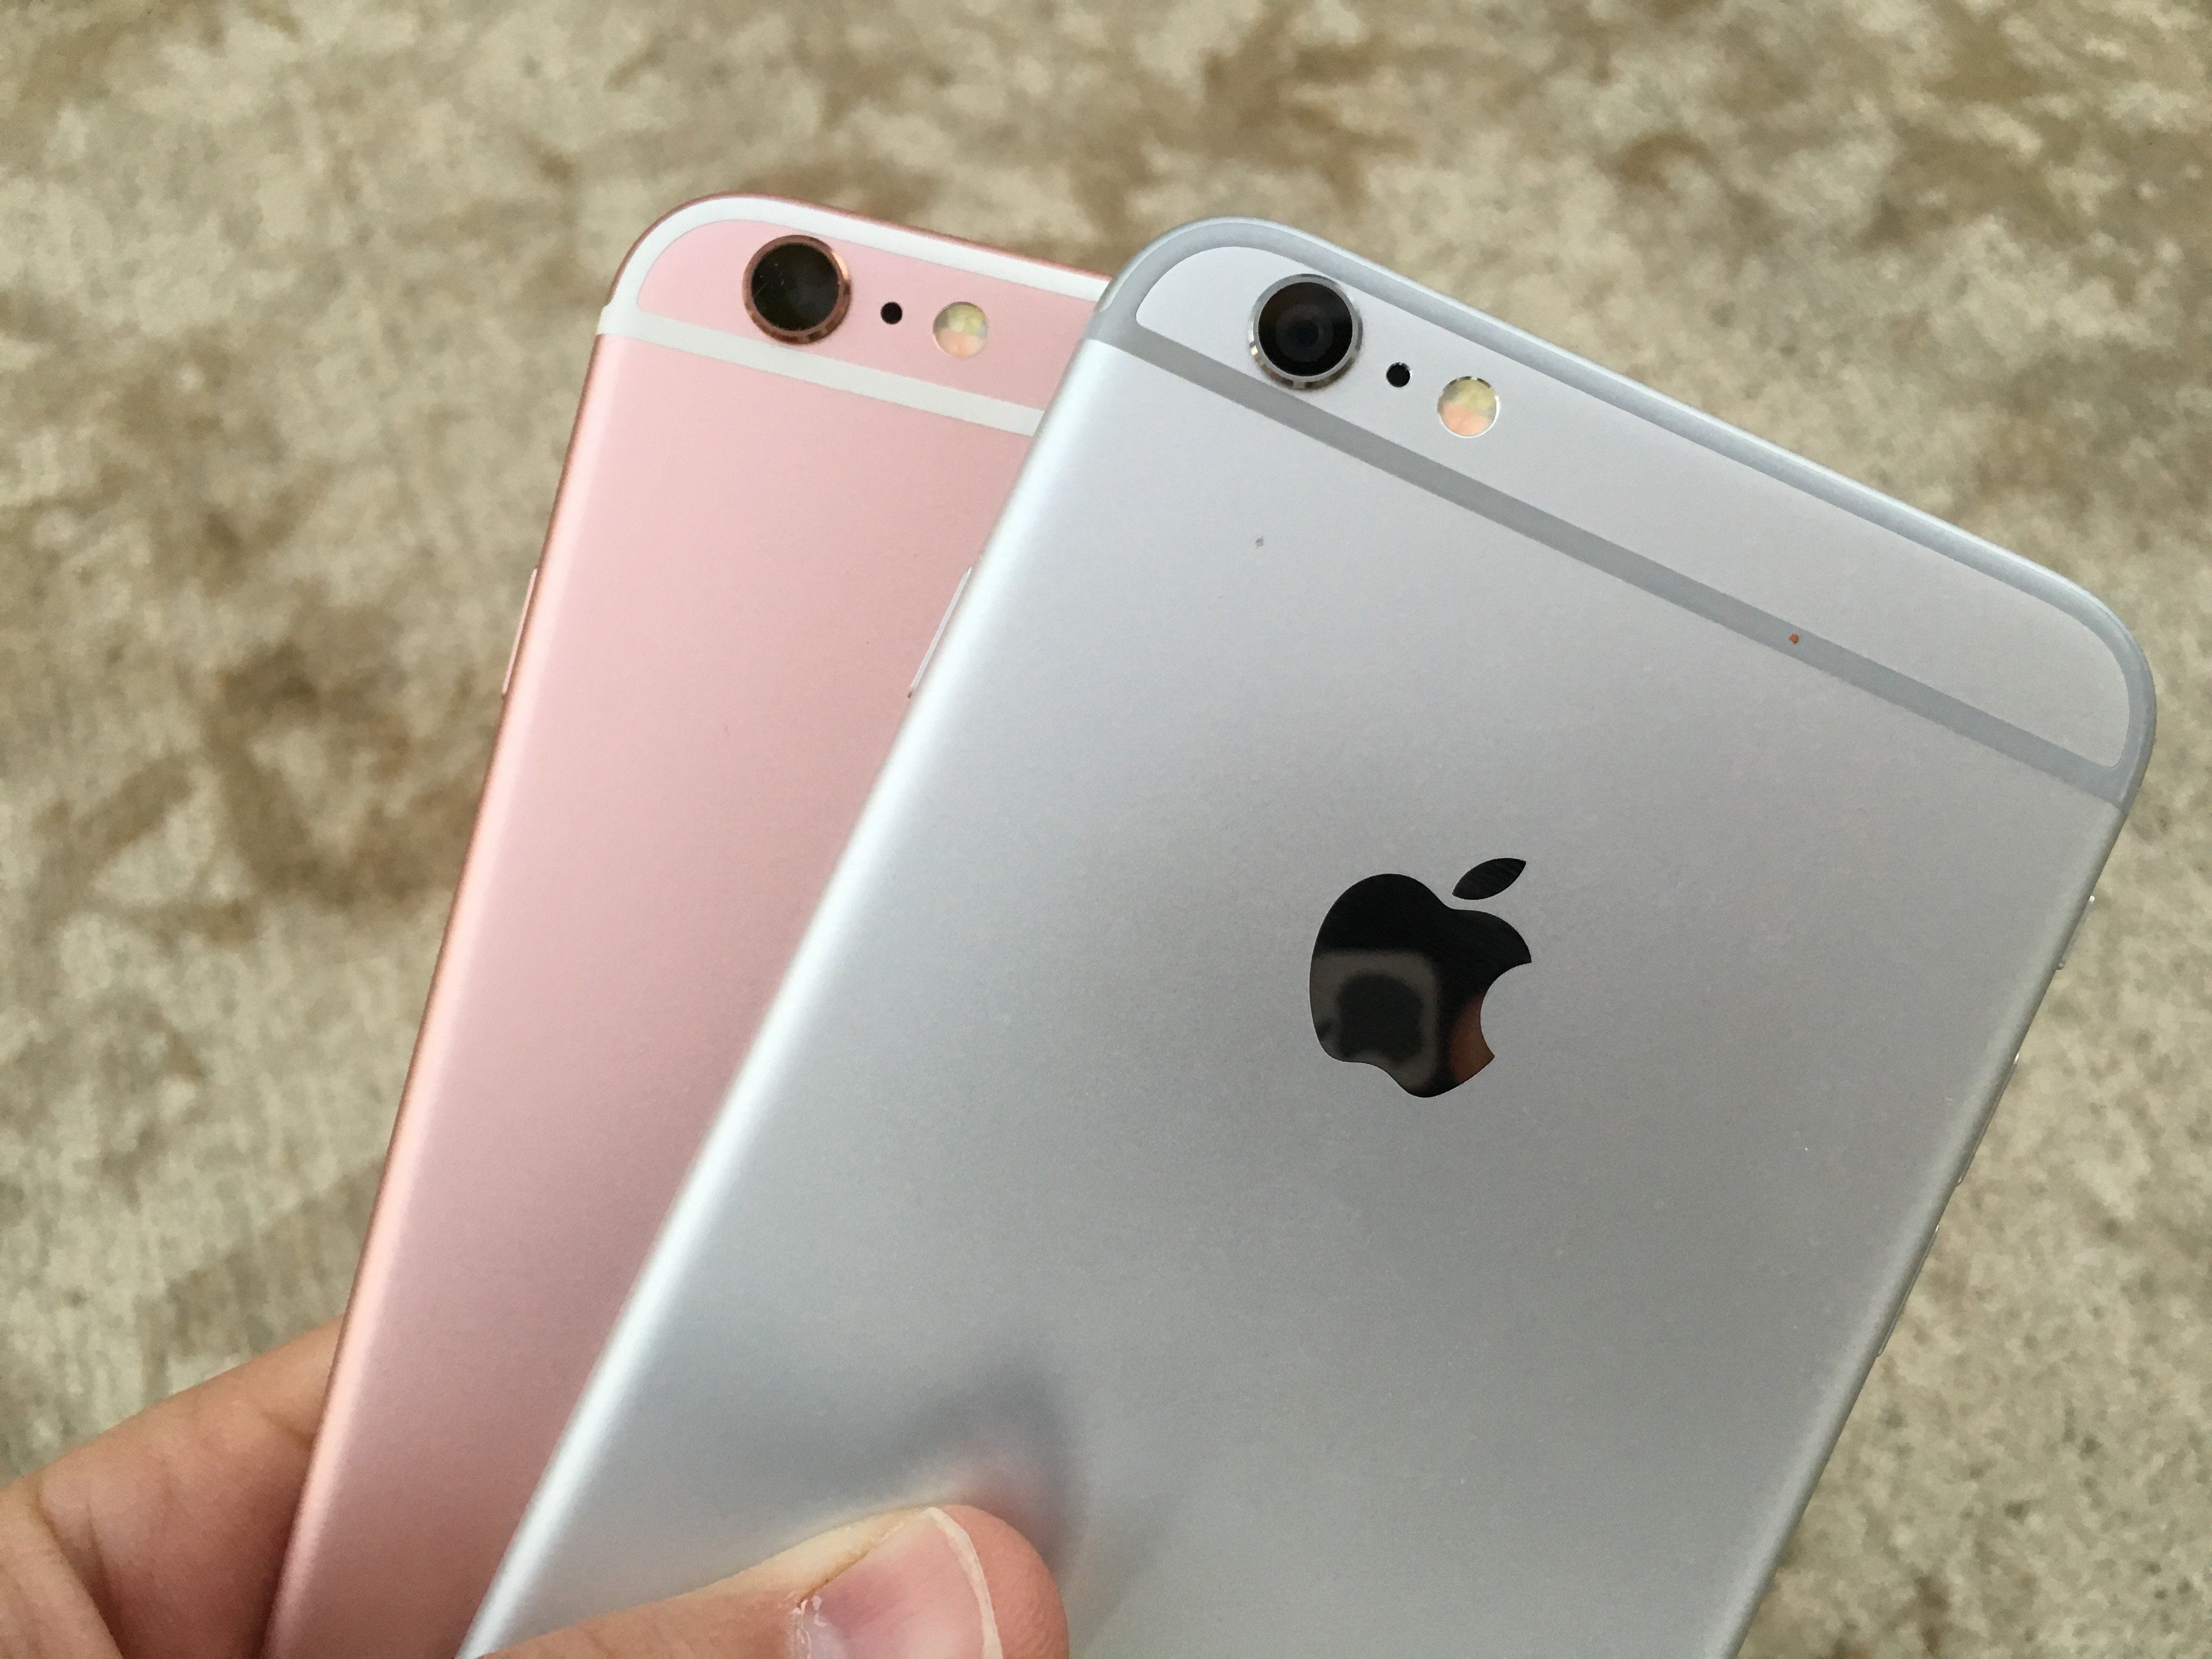 Rumors suggest Apple is preparing a new iPhone 7 Plus camera upgrade.